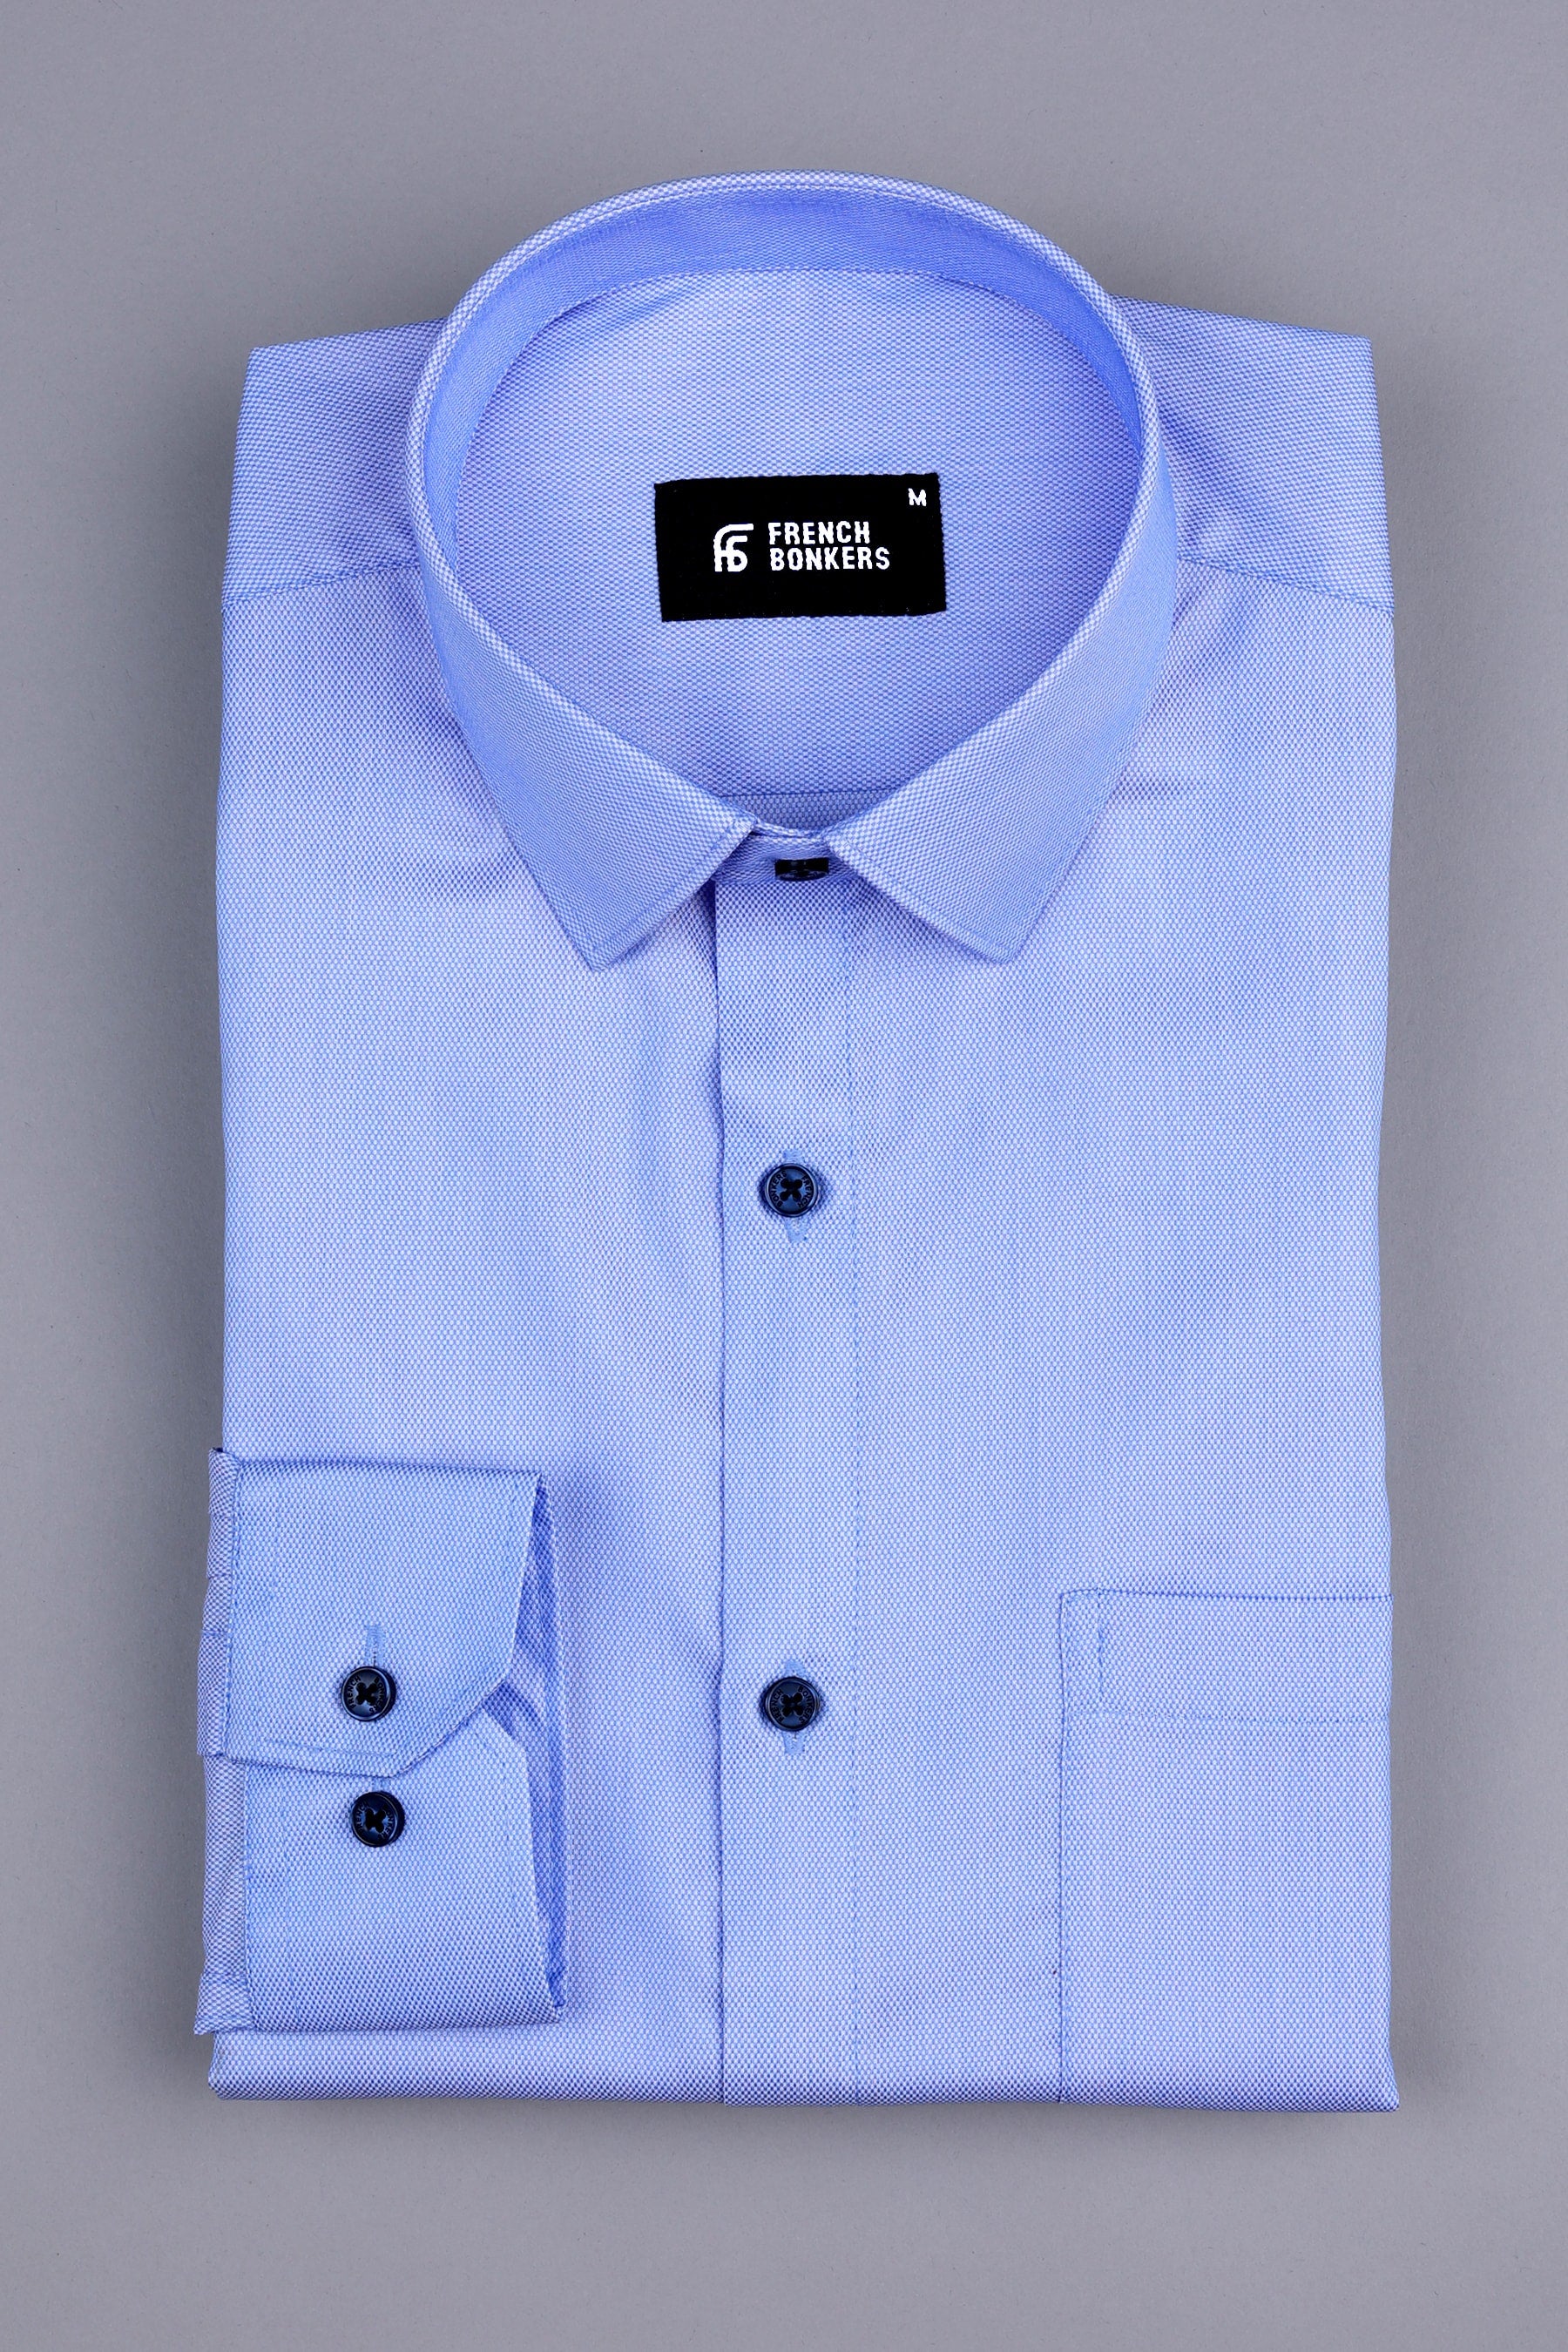 Neon blue dobby texture shirt